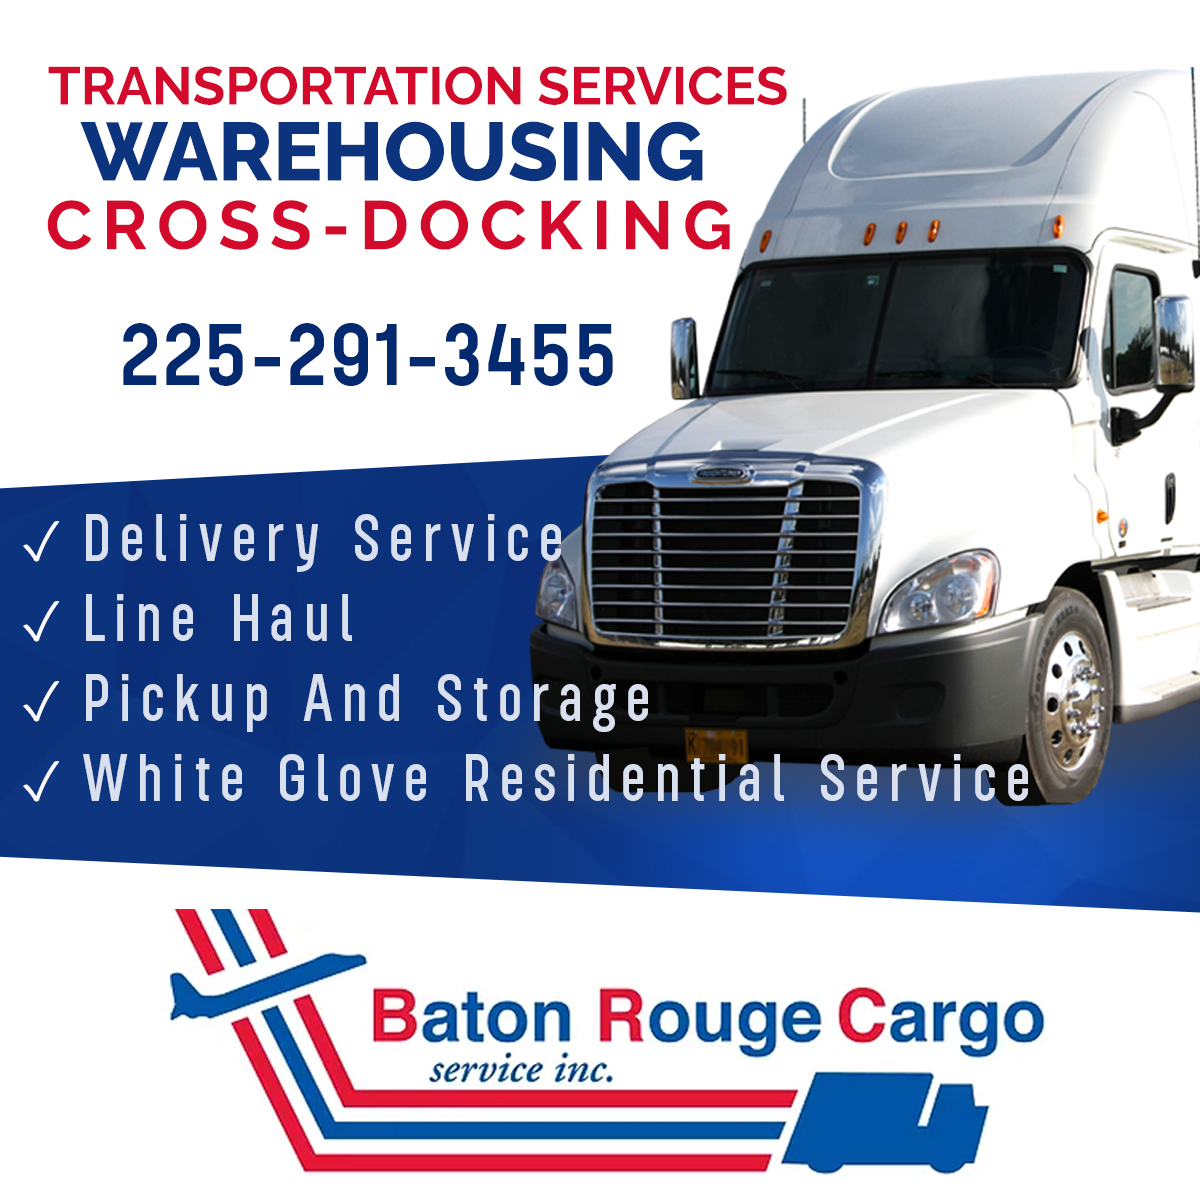 Baton Rouge Cargo Service, Inc